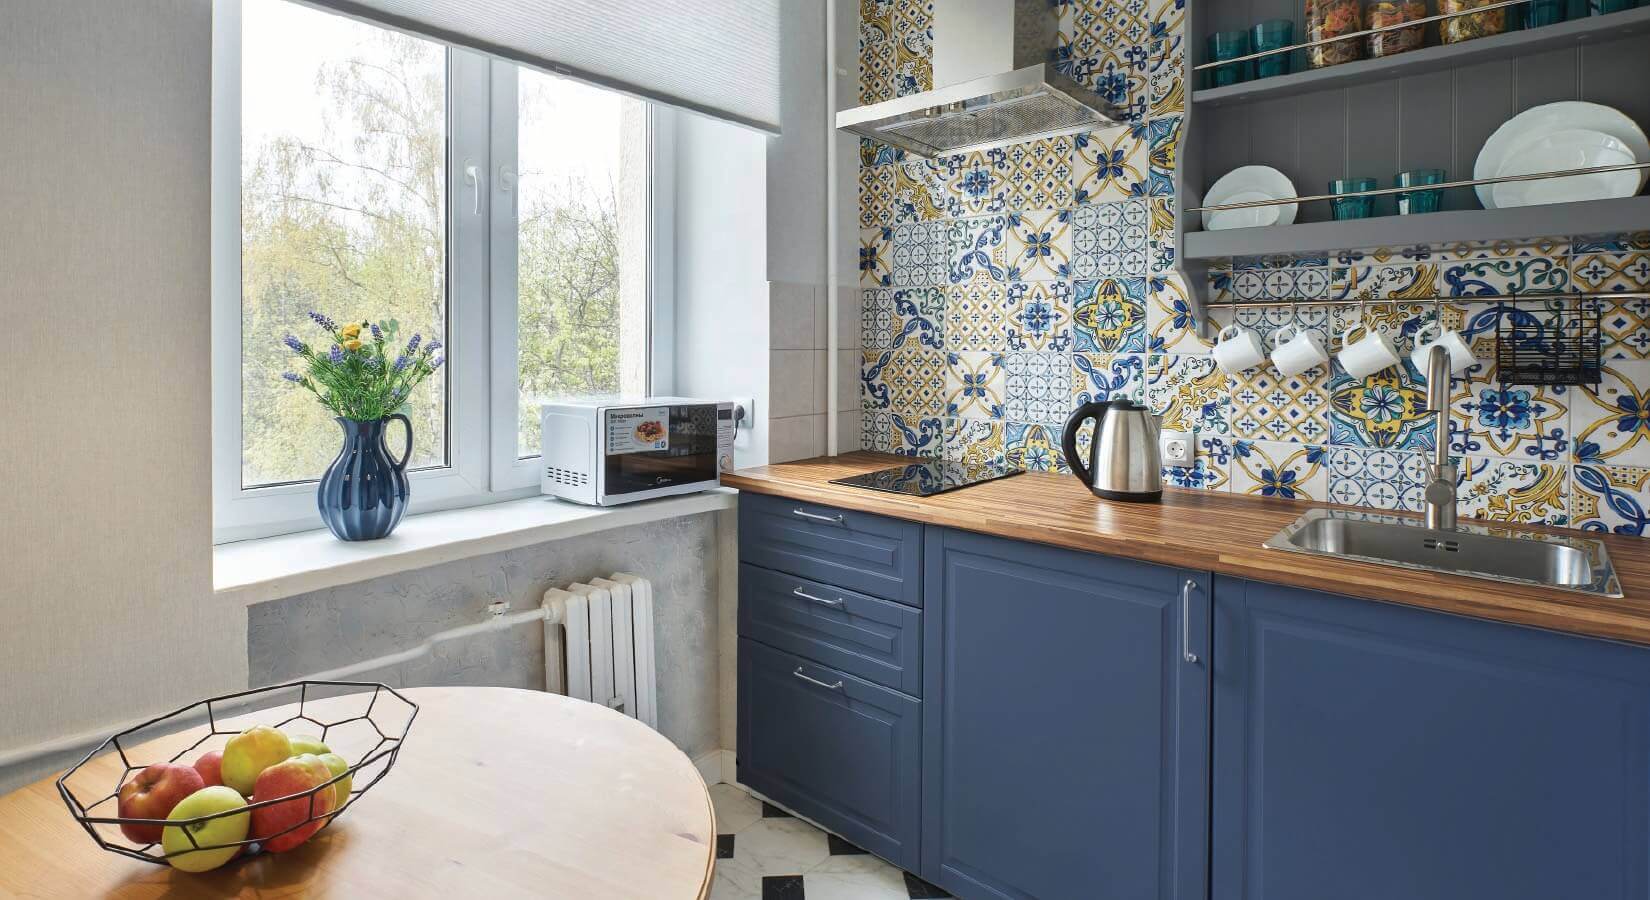 Blue Kitchen Cabinet Ideas, Image Gallery